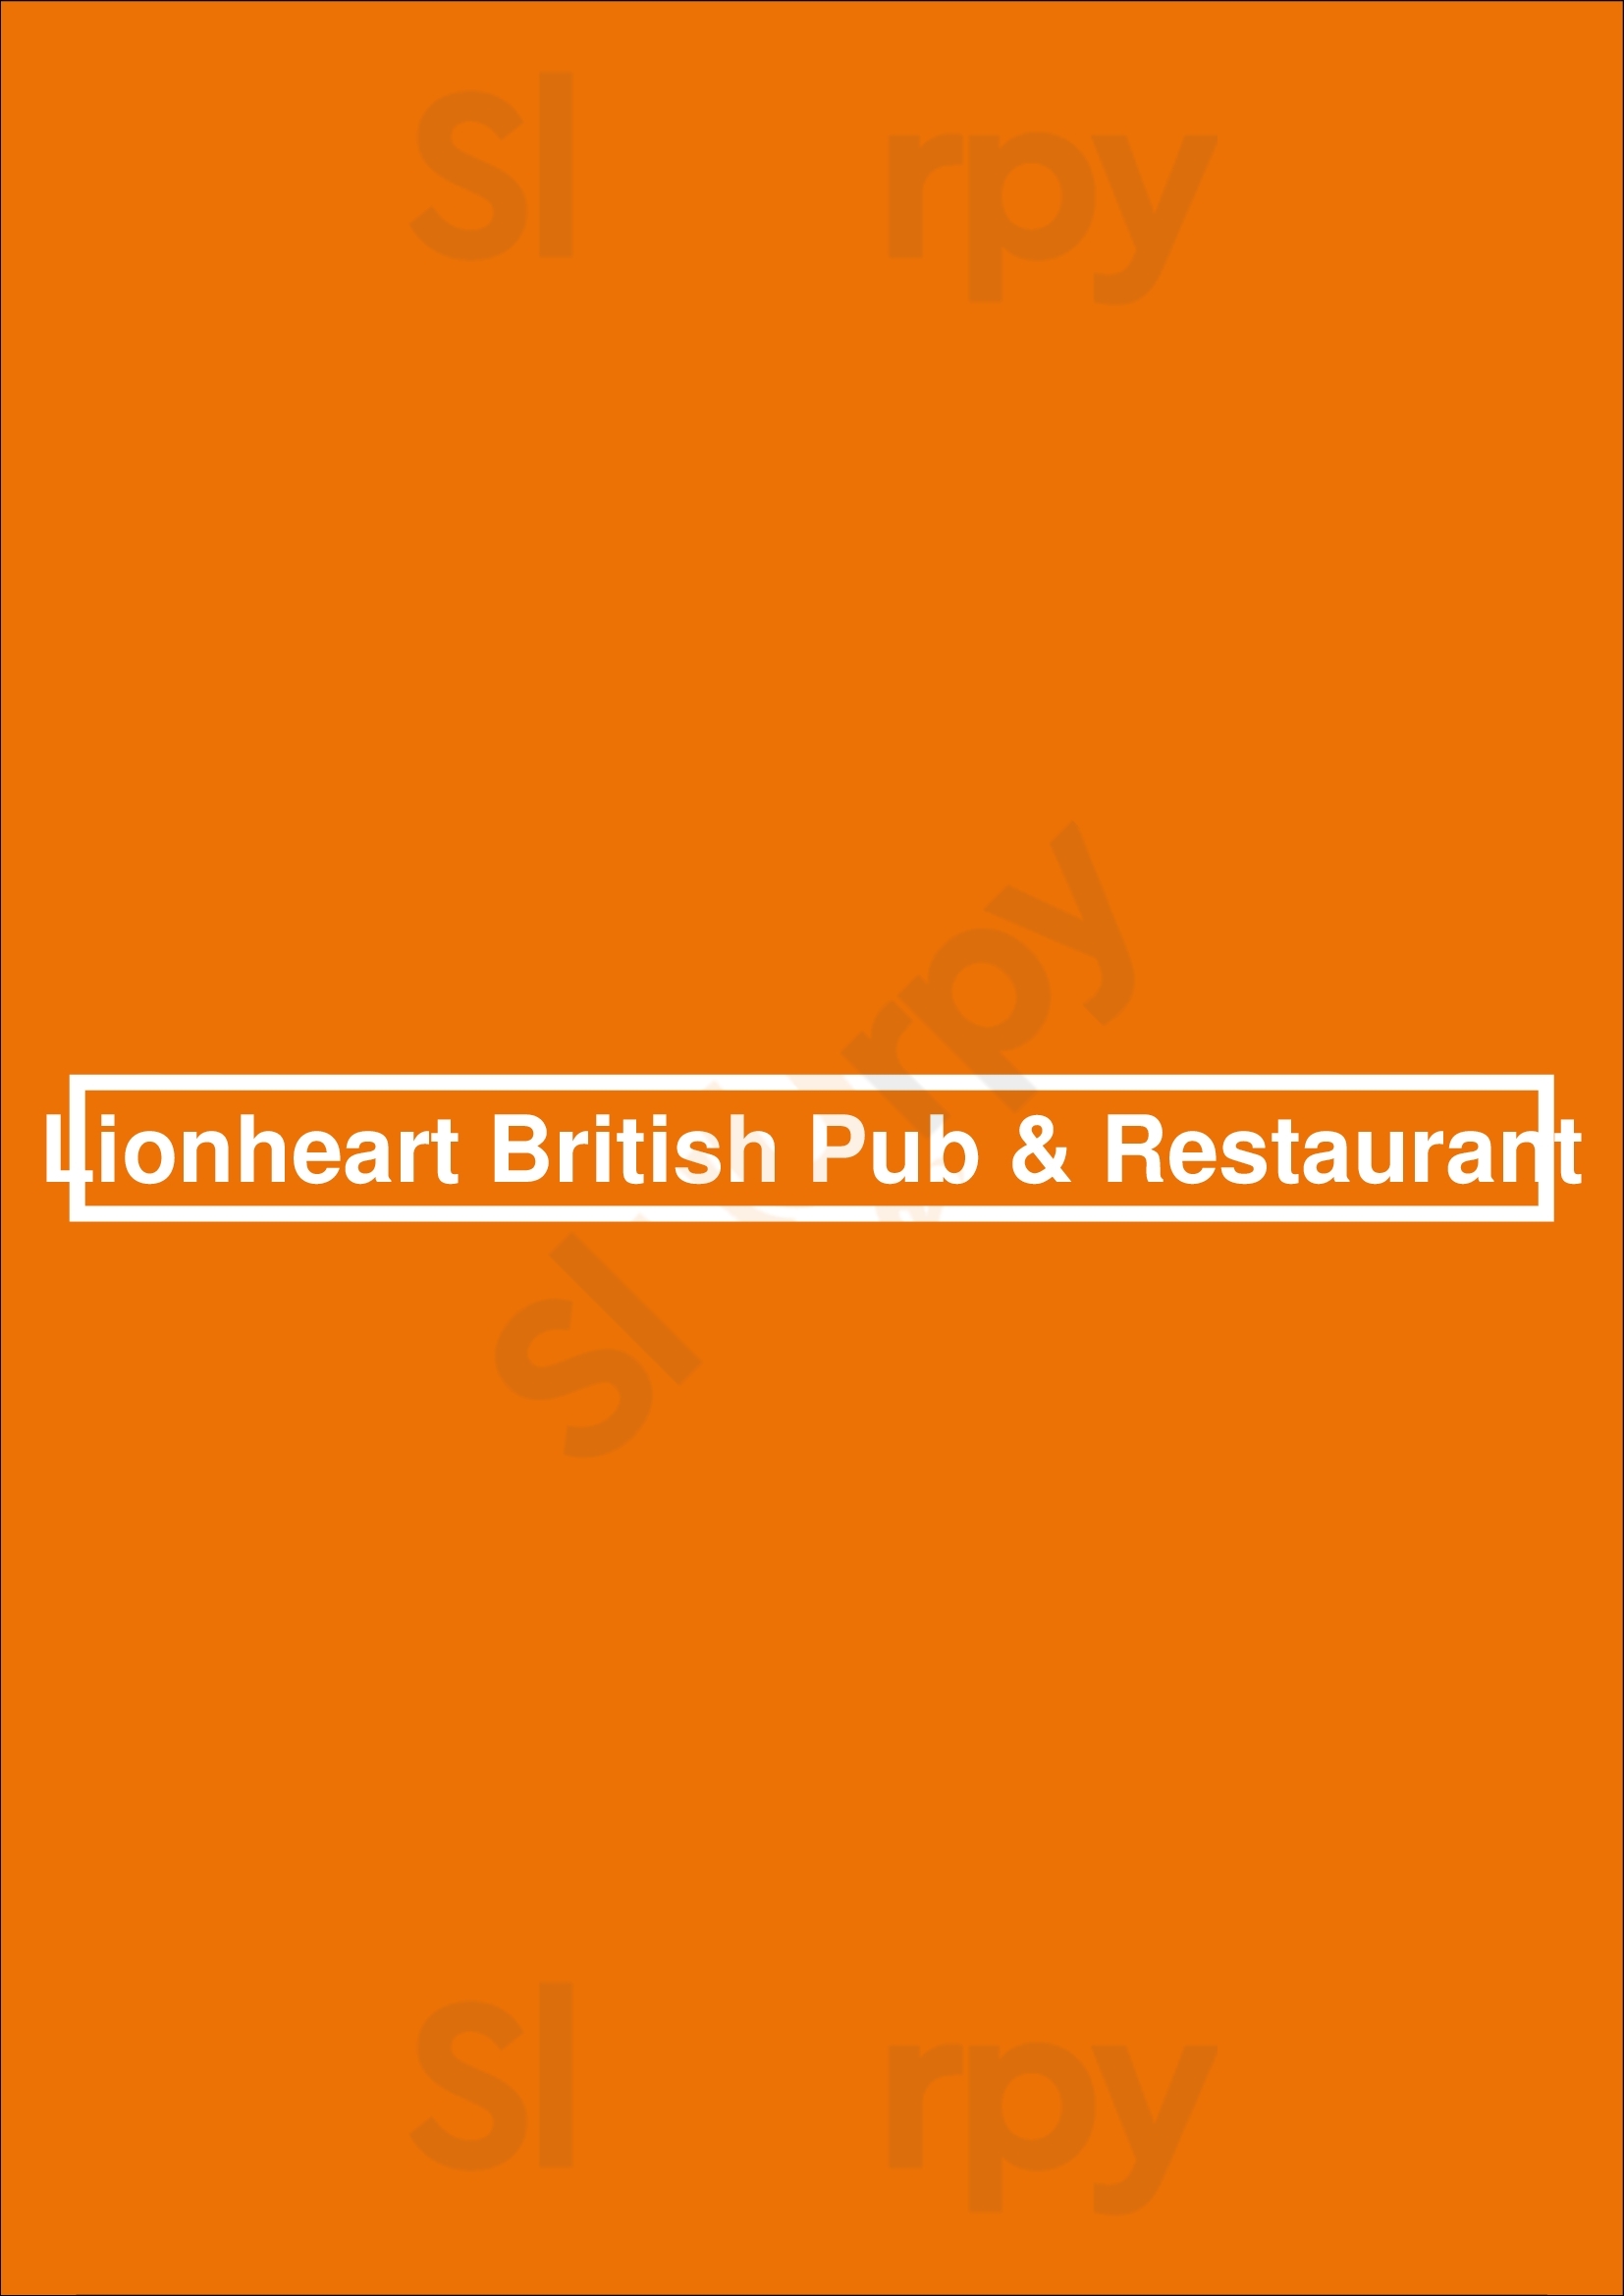 Lionheart British Pub & Restaurant Mississauga Menu - 1